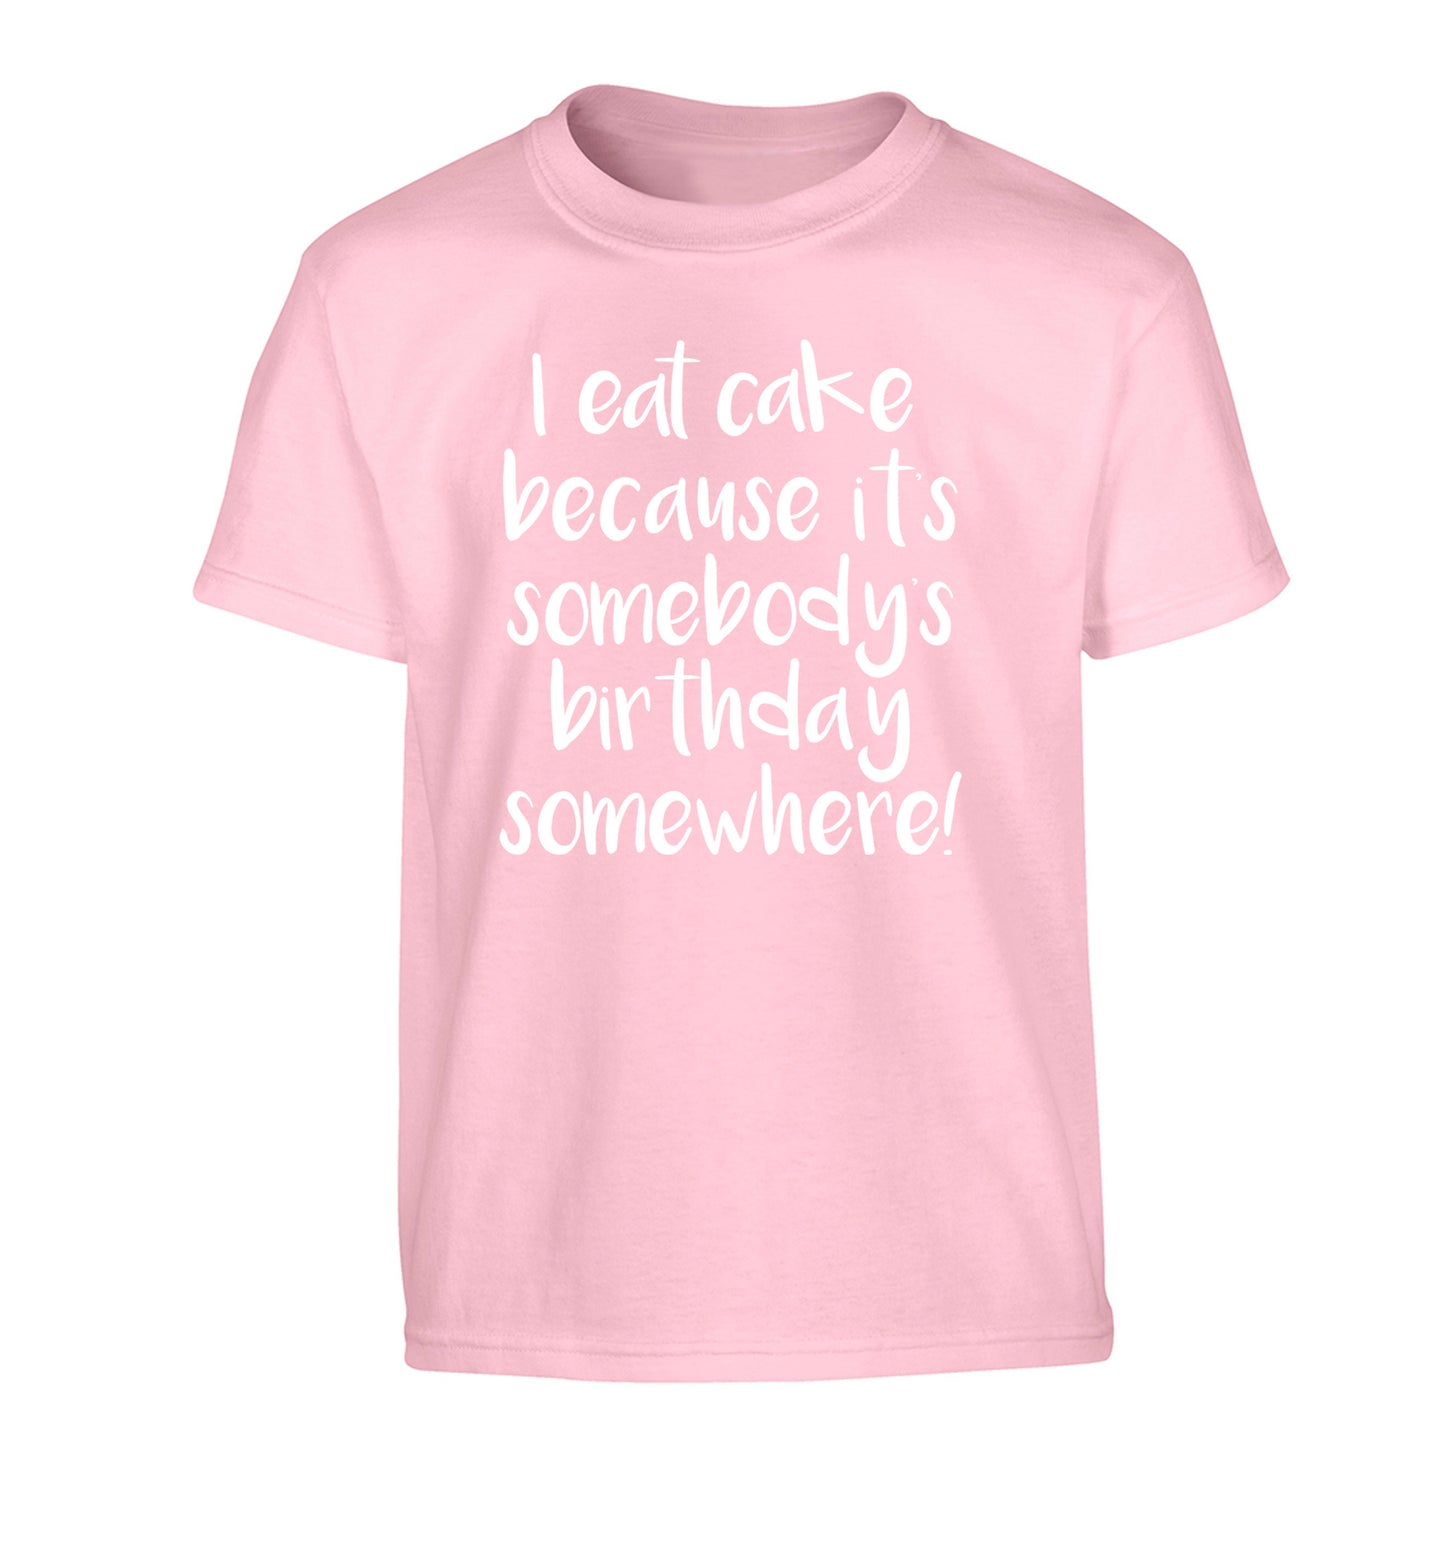 I eat cake because it's somebody's birthday somewhere! Children's light pink Tshirt 12-14 Years